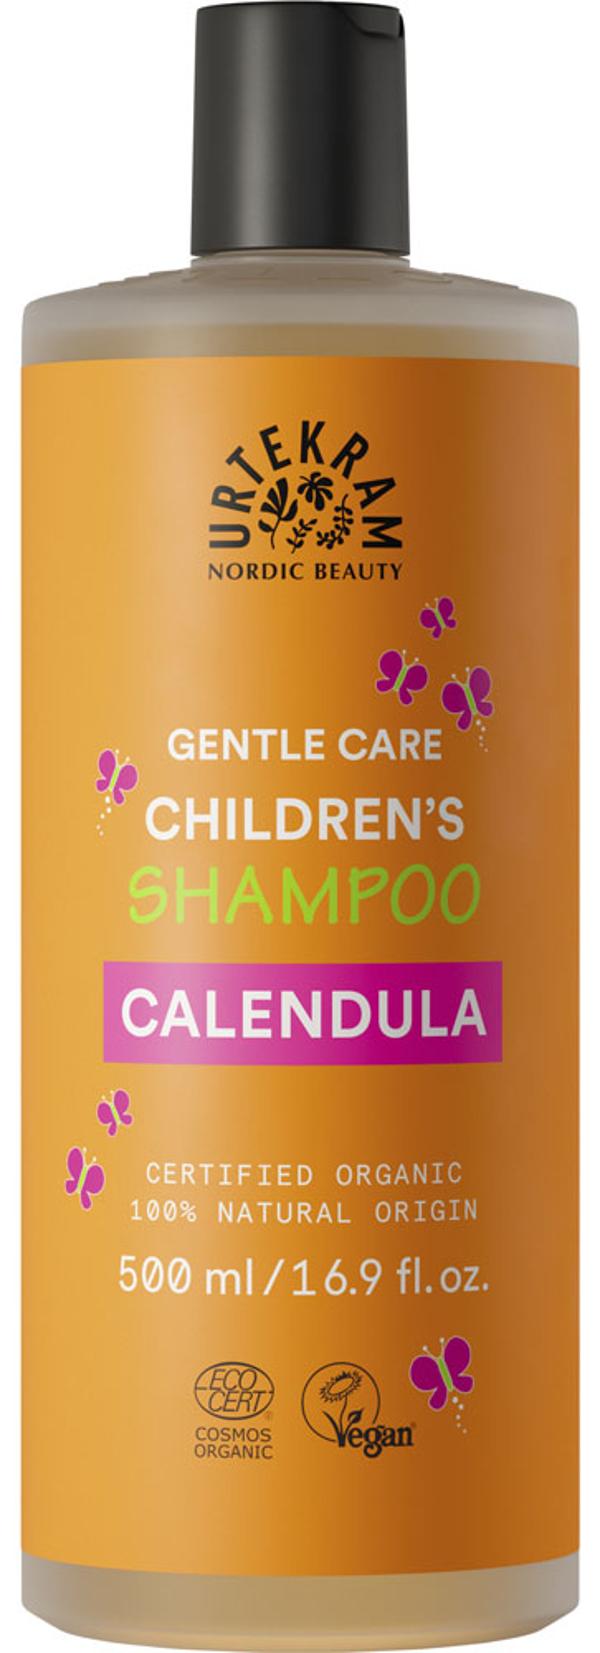 Produktfoto zu Urtekram Kinder Shampoo Calendula 500ml